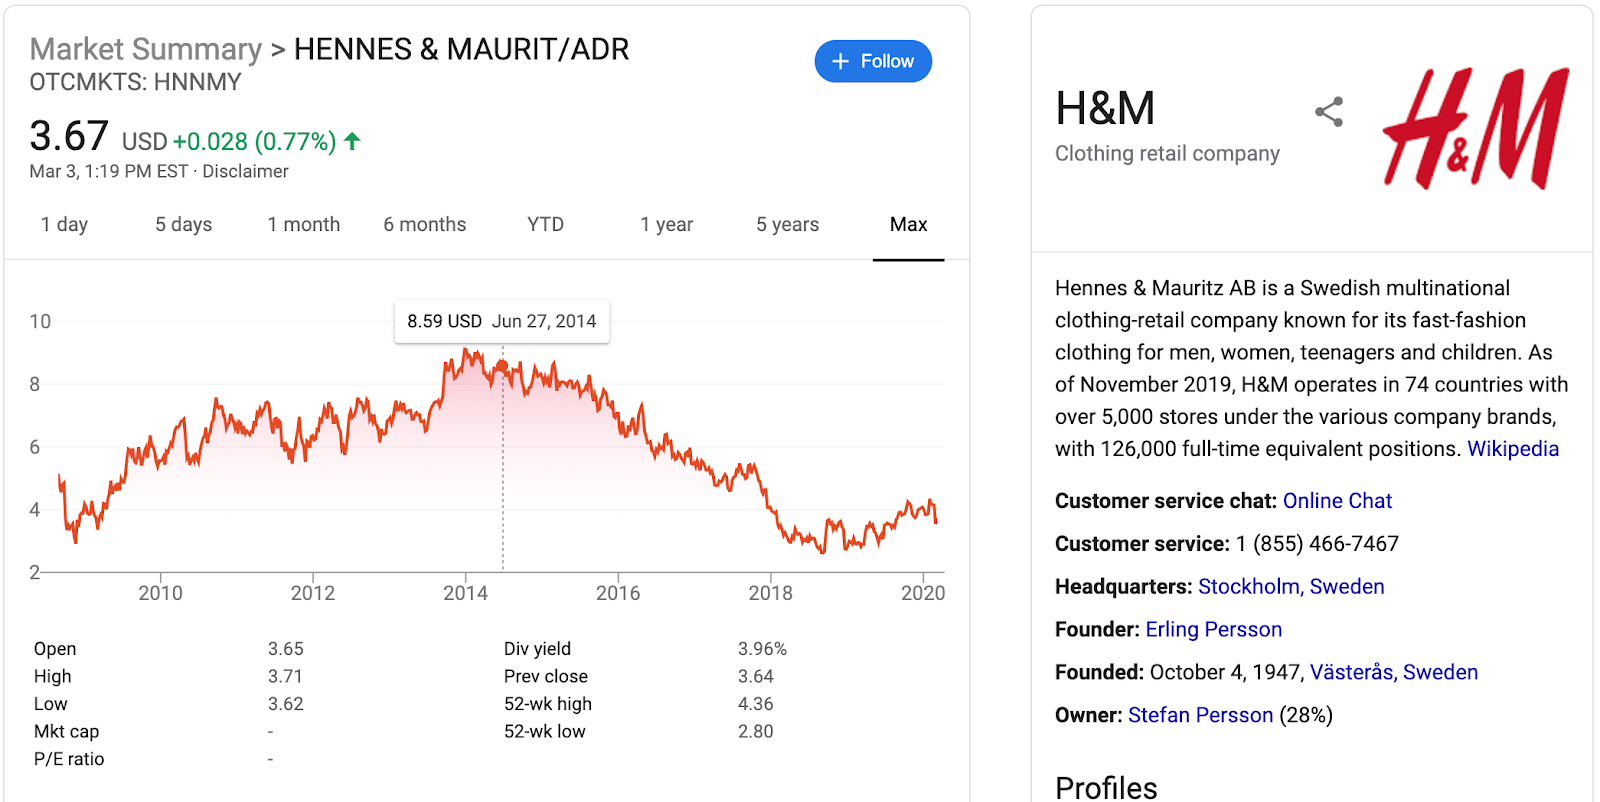 #FastFashion H&M Brand Image & Stock Price